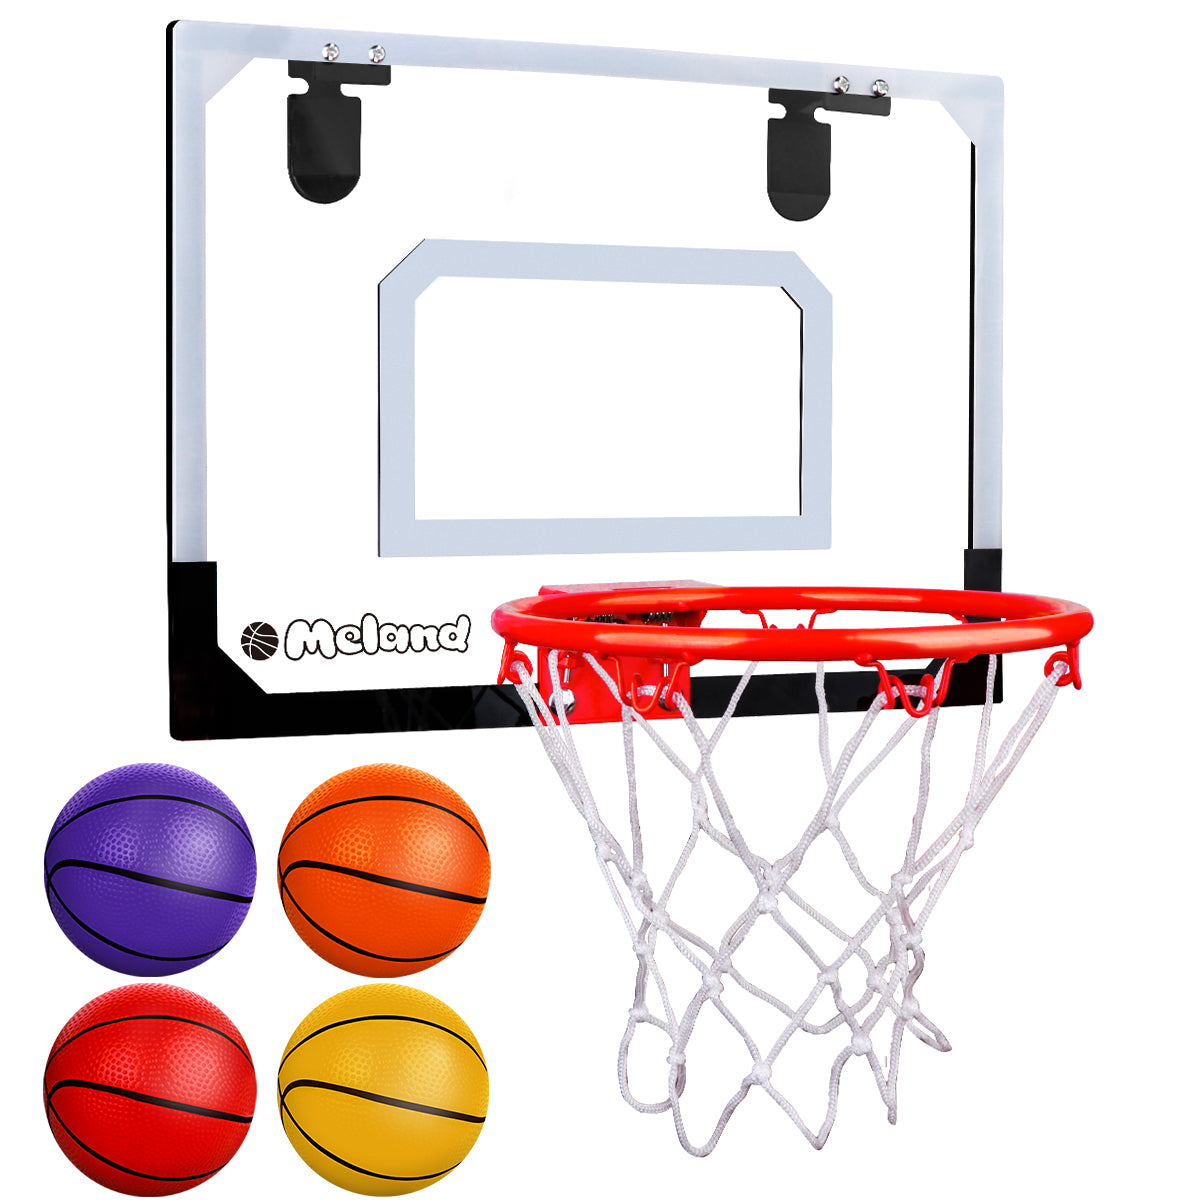 I BUILT A Full Indoor Basketball Mini Hoop COURT! 